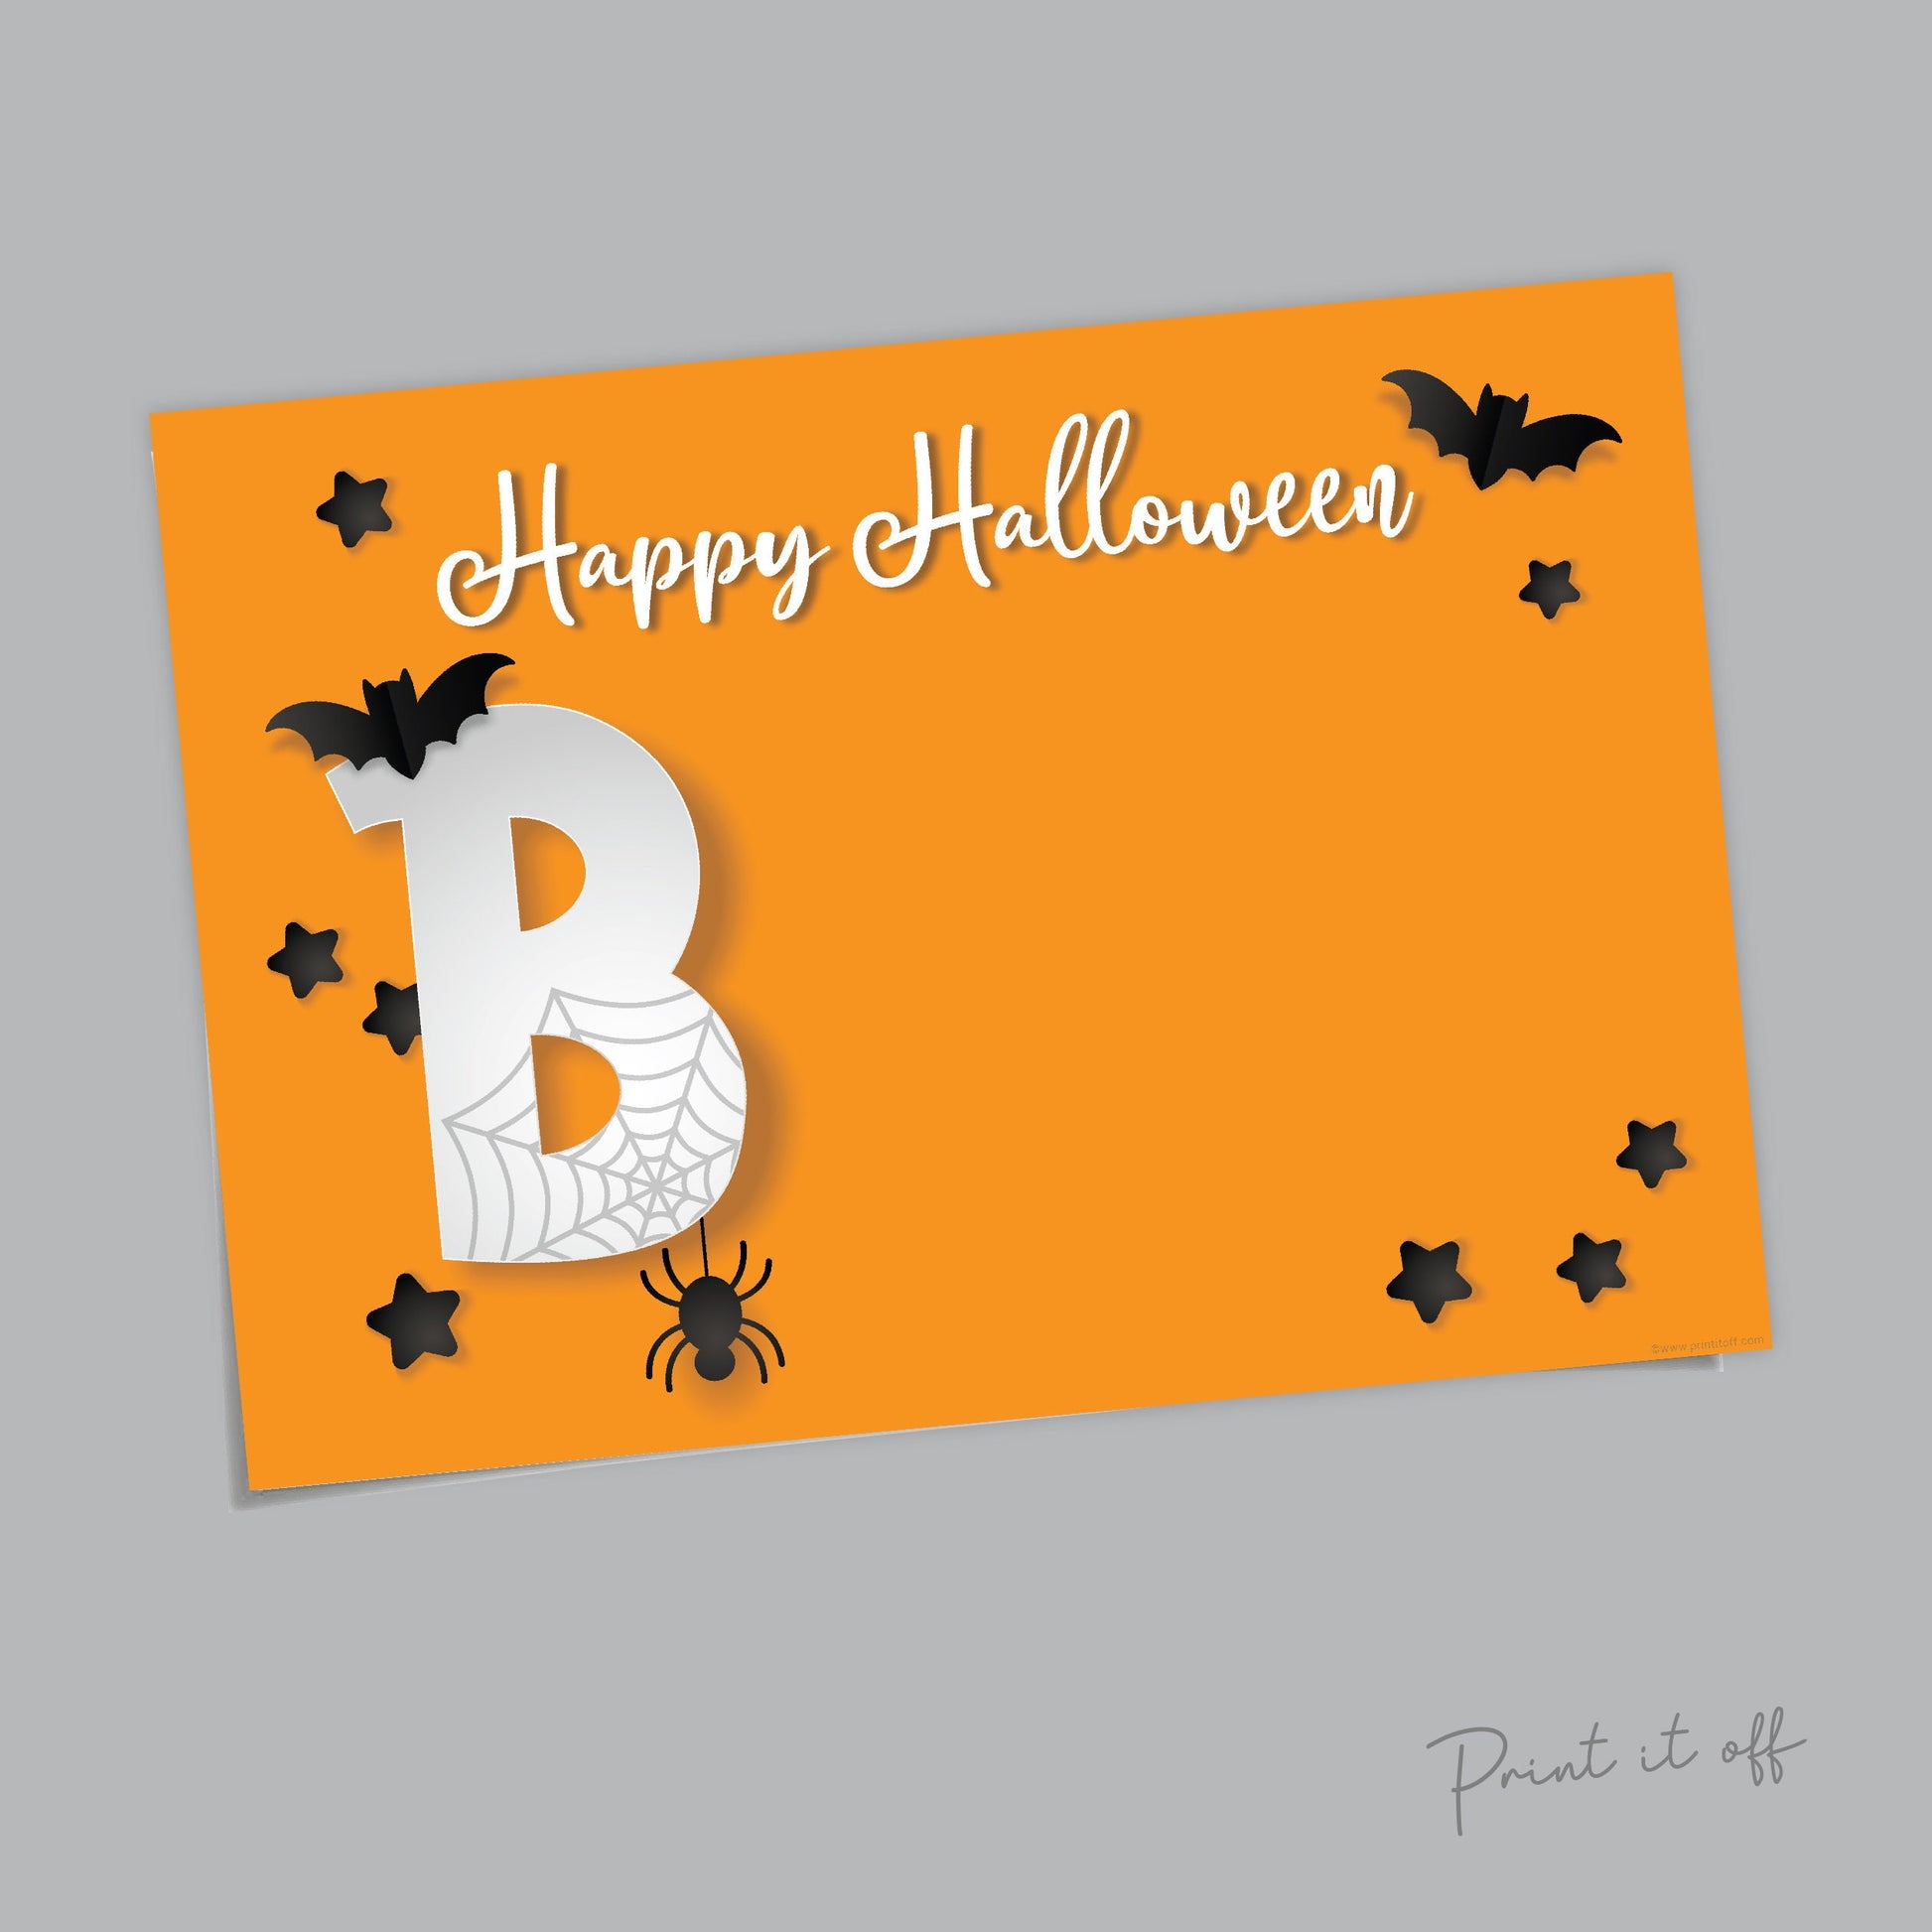 Boo Happy Halloween / Ghost Footprint Handprint Art Craft / Child Baby Card Memory Activity Keepsake Decor DIY Printable / Print It Off